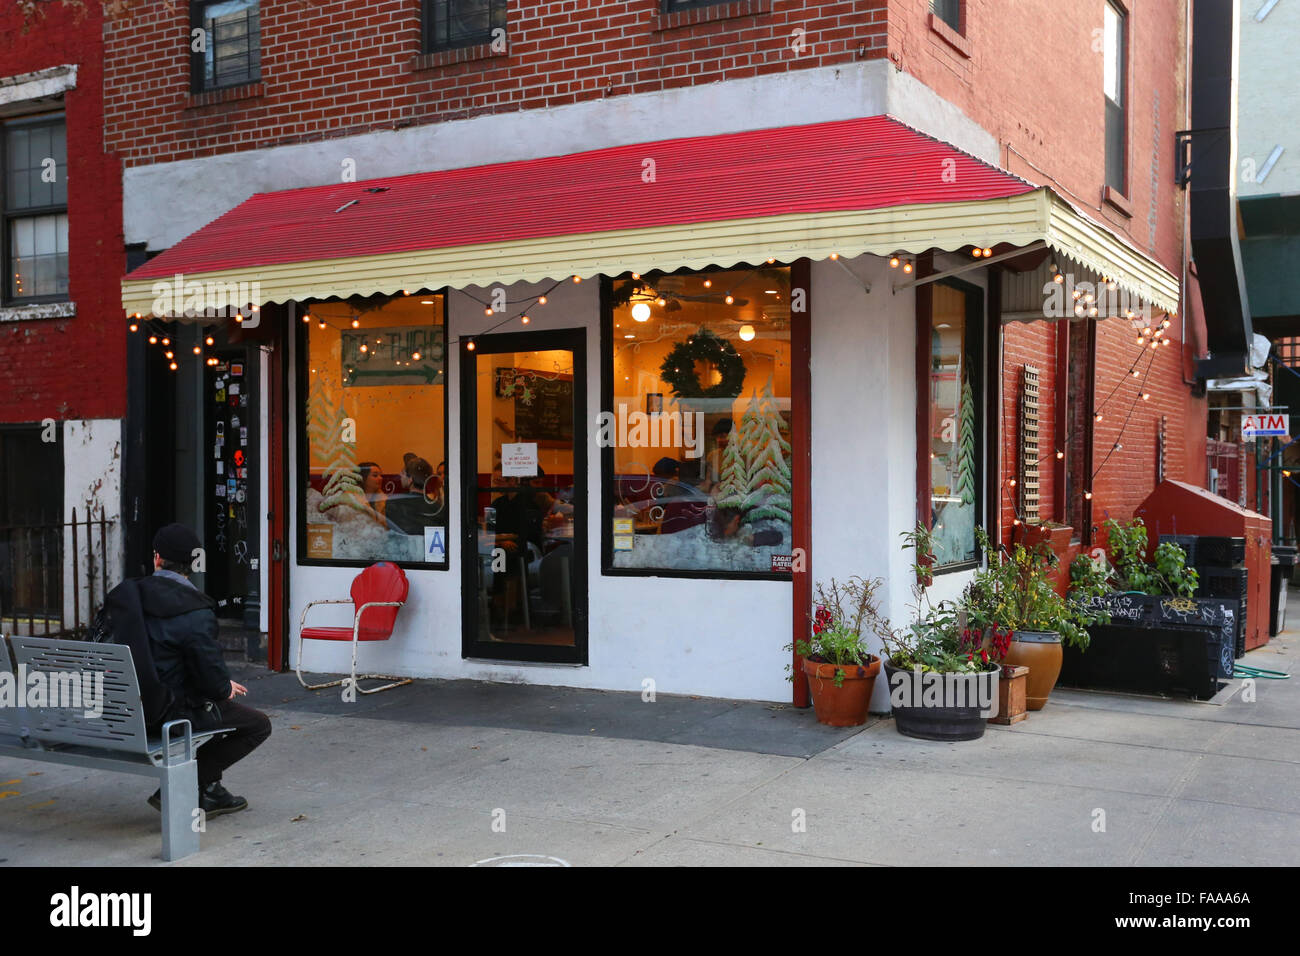 Pies 'n' cuisses, 166 S 4th St, Brooklyn, NY. Façade extérieure d'un restaurant de cuisine de confort du sud dans le quartier de Williamsburg. Banque D'Images